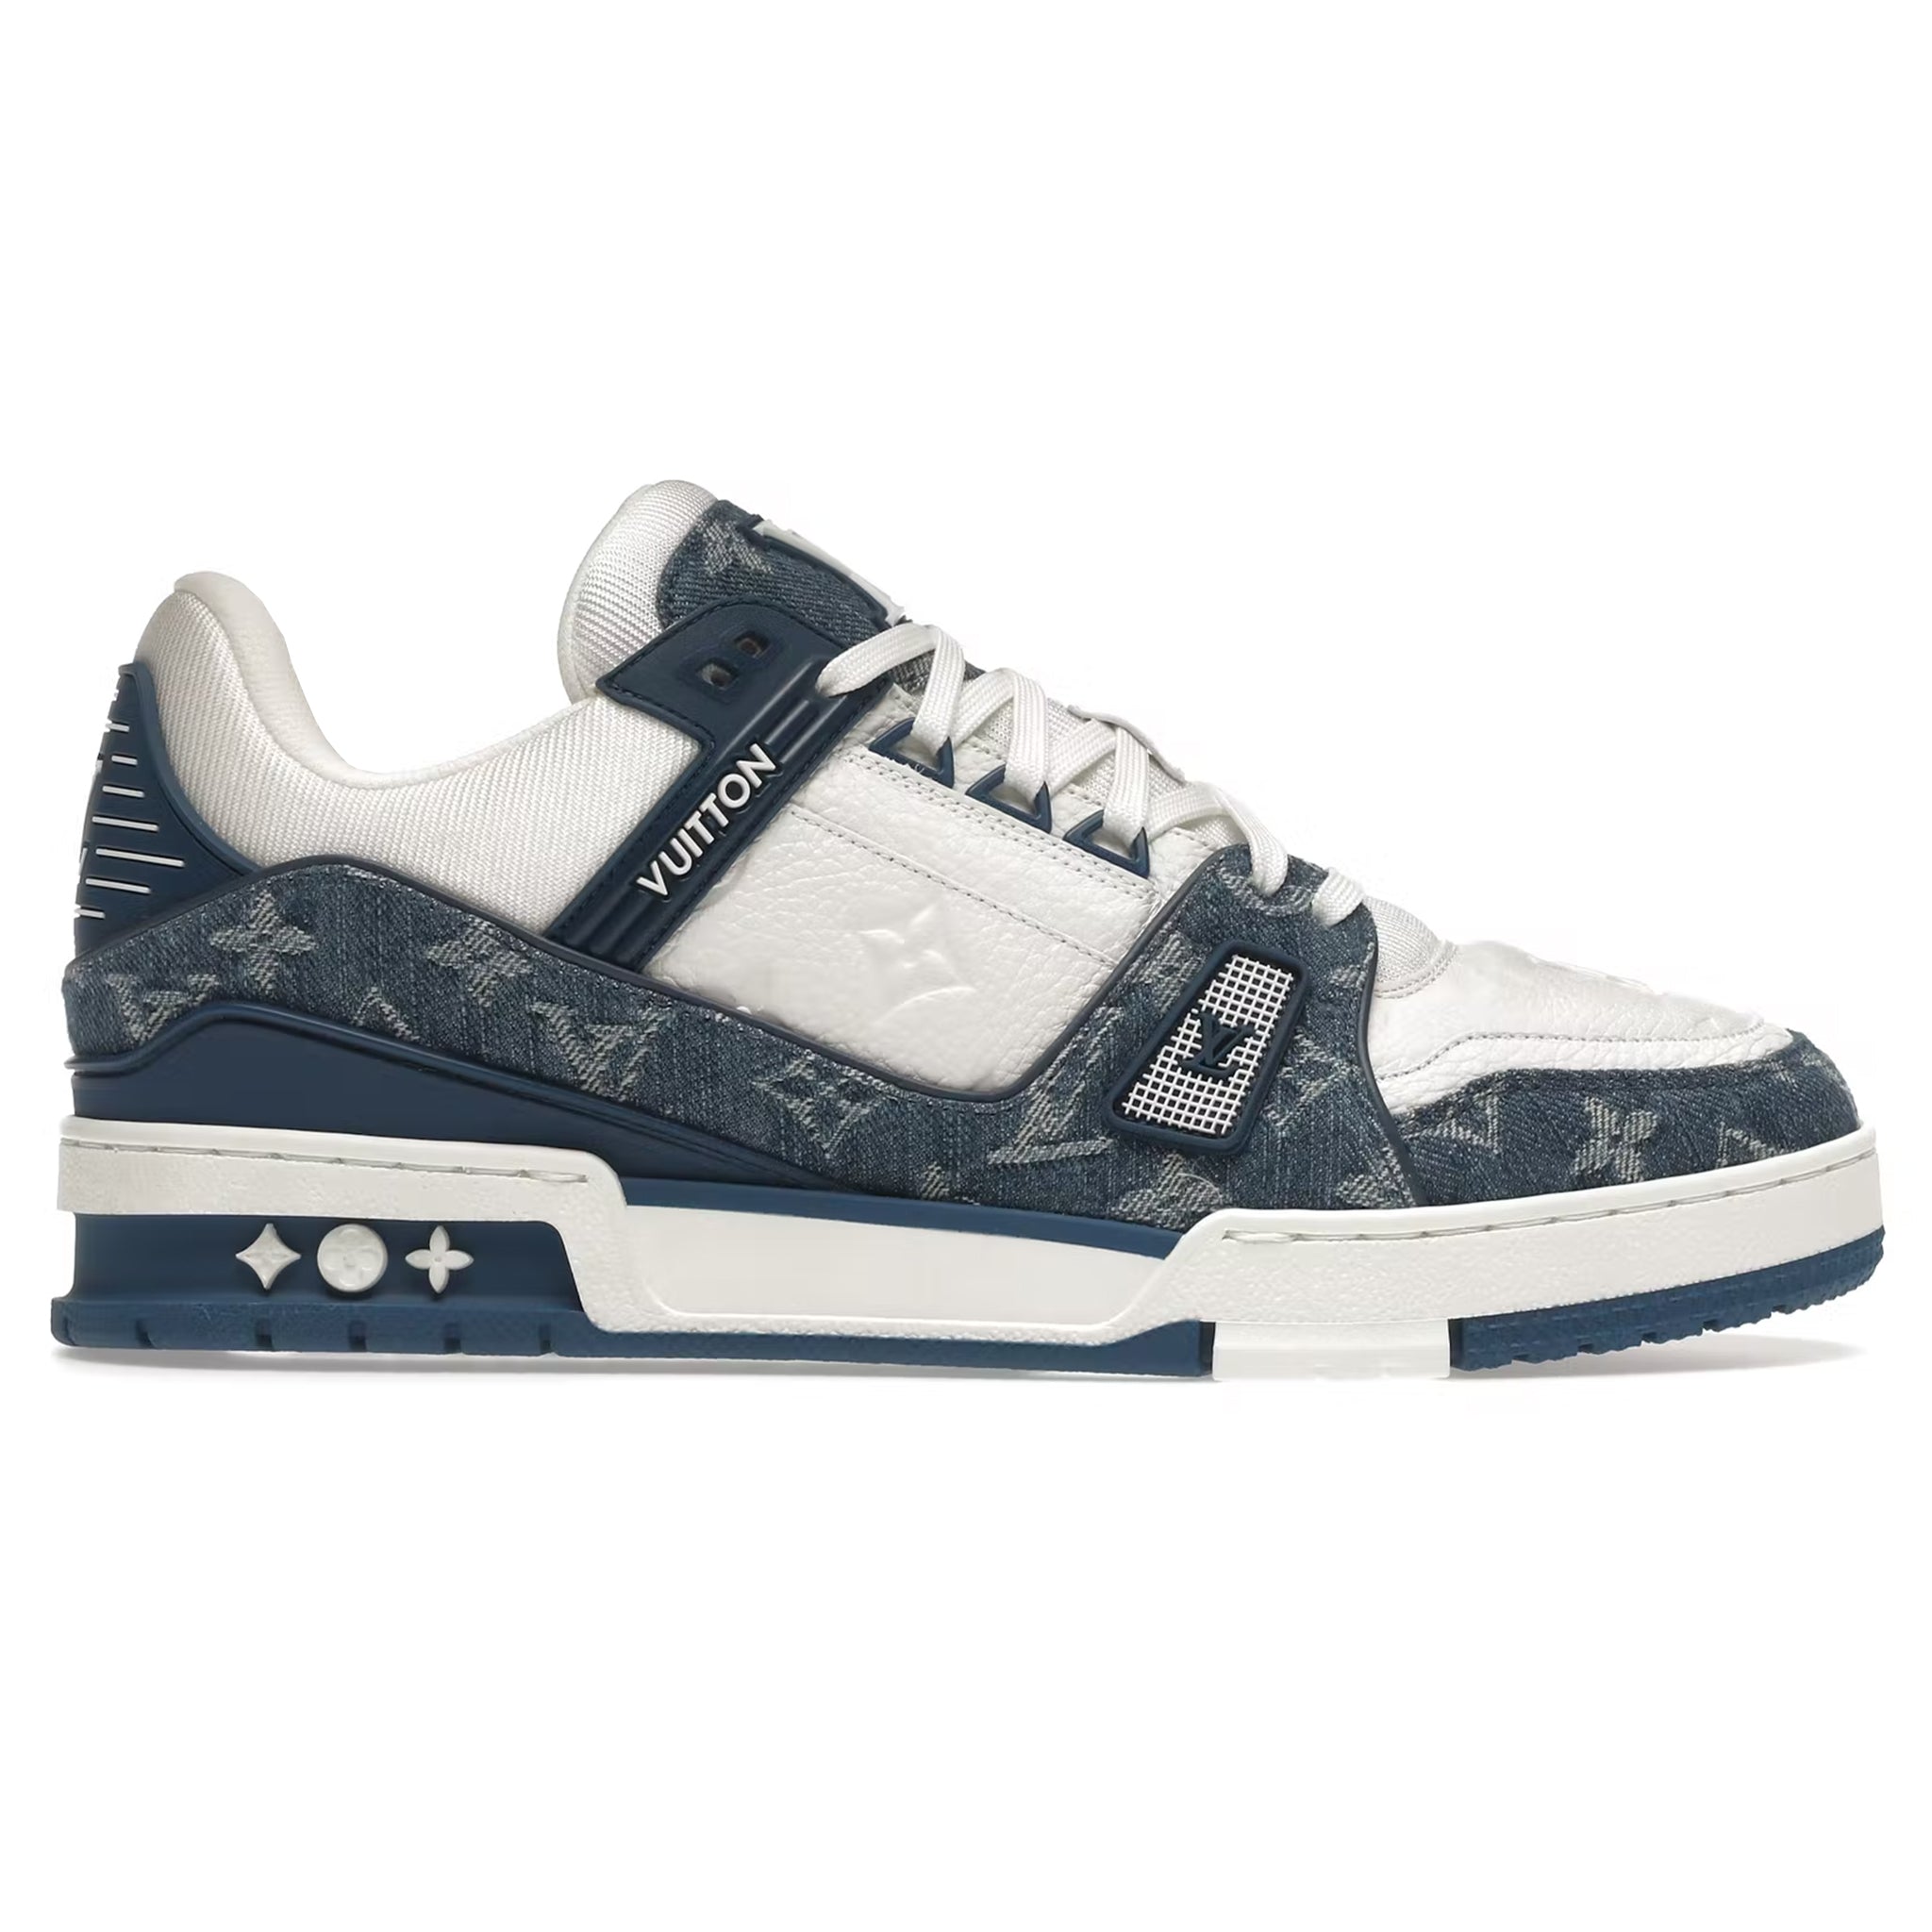 Louis Vuitton LV Trainer Blue Sneaker, Cheap Hotelomega Jordan outlet